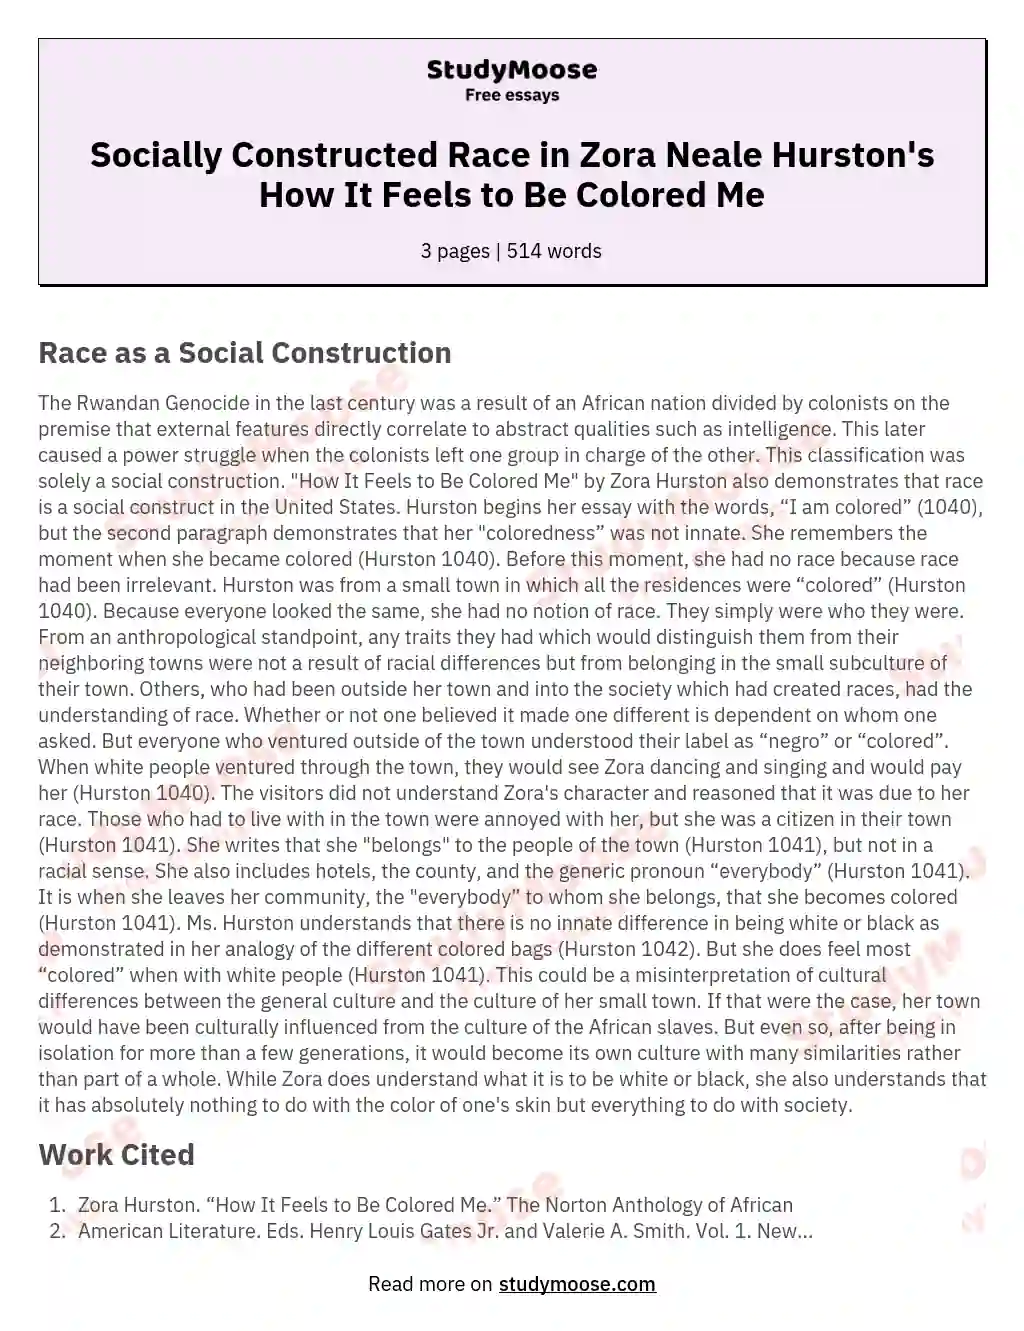 The Fluidity of Race: A Social Construct essay